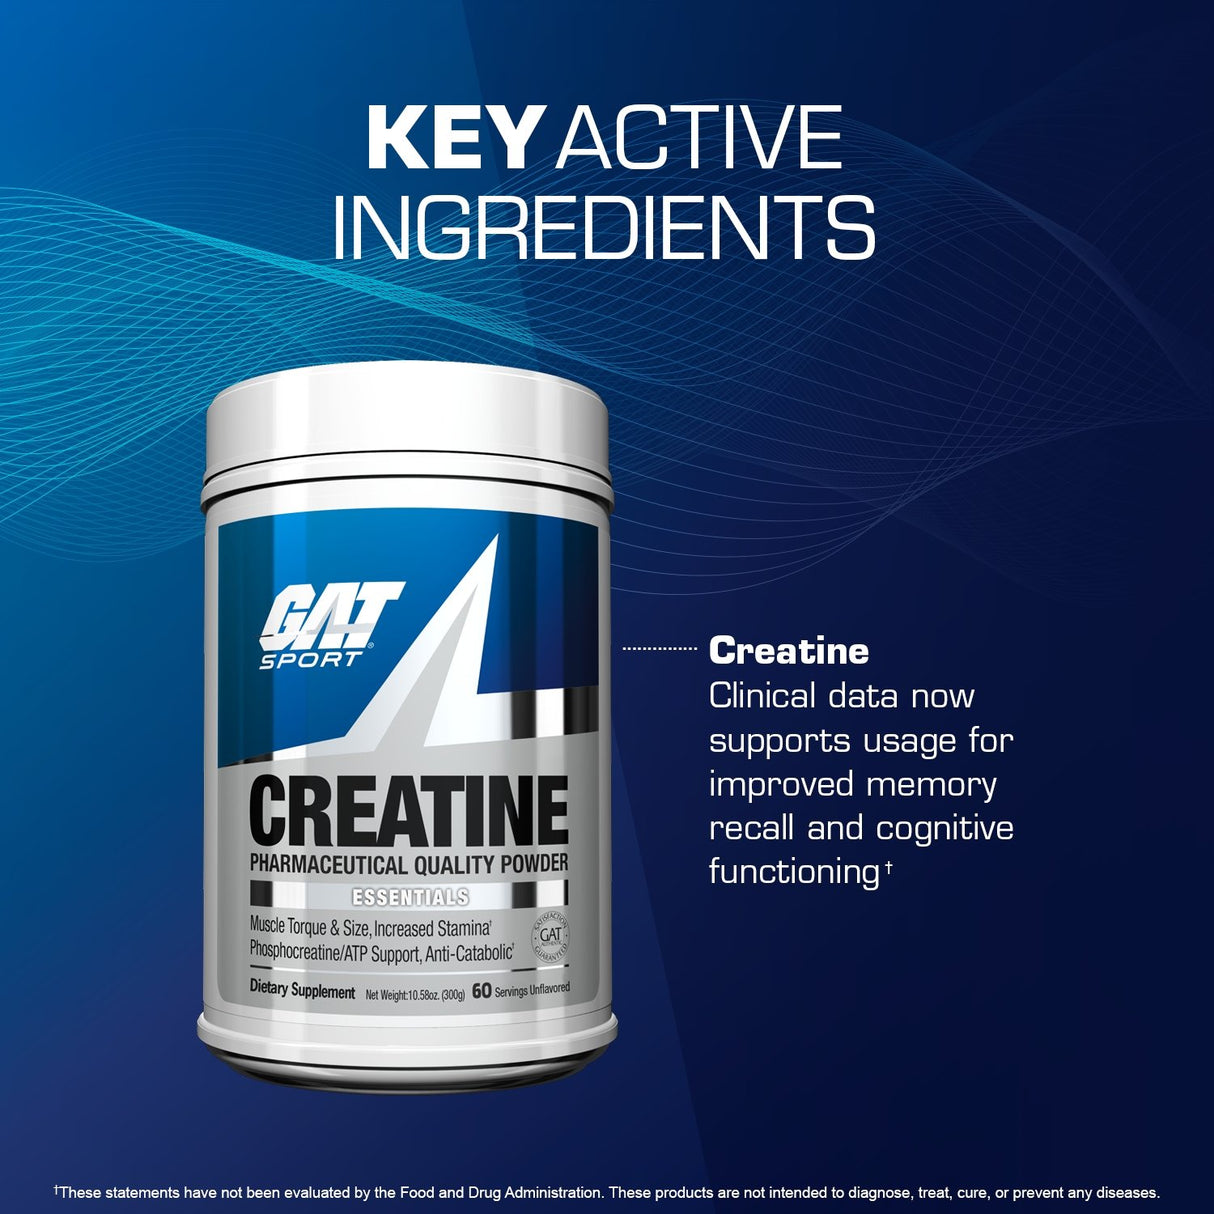 GAT SPORT CREATINE - key ingredients